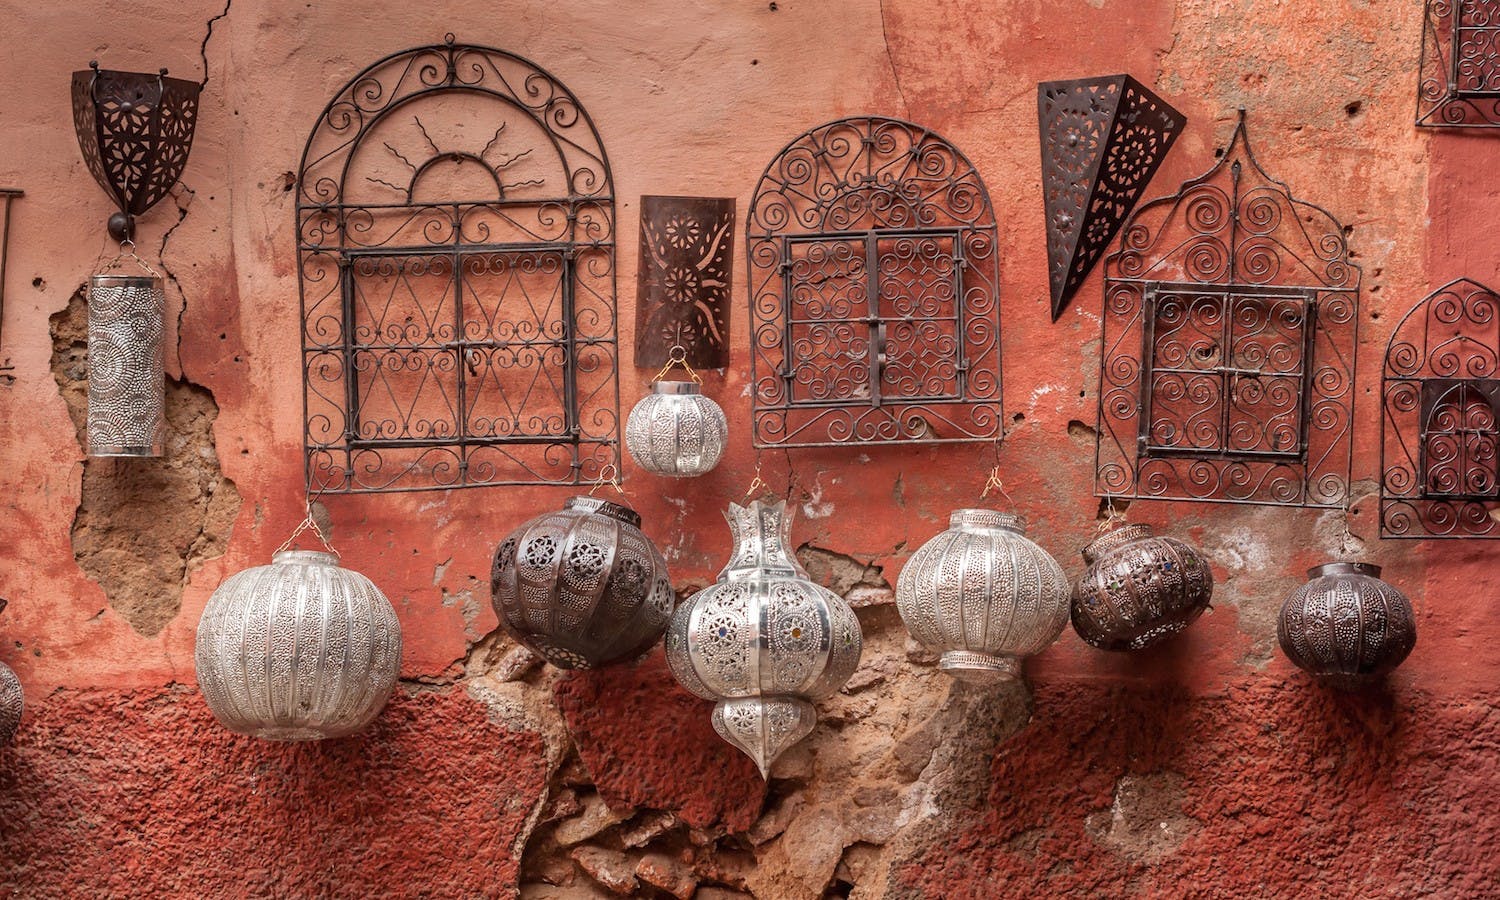 Metalwork for sale in souk in Marrakech.jpg